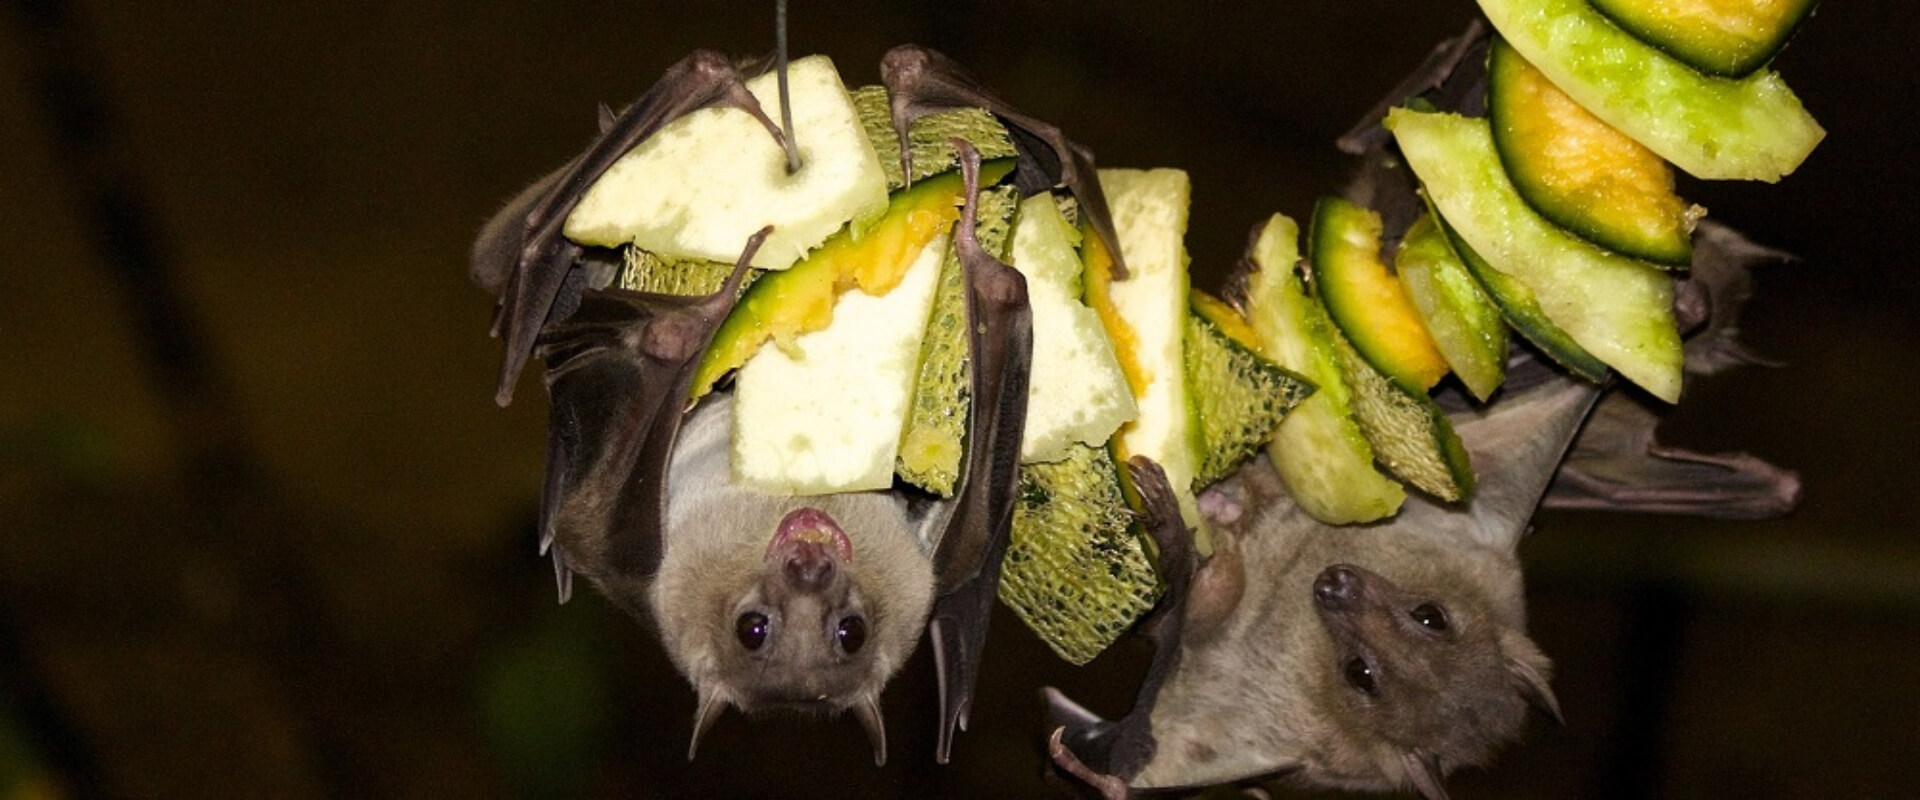 Monteverde Bat Jungle | Costa Rica Jade Tours